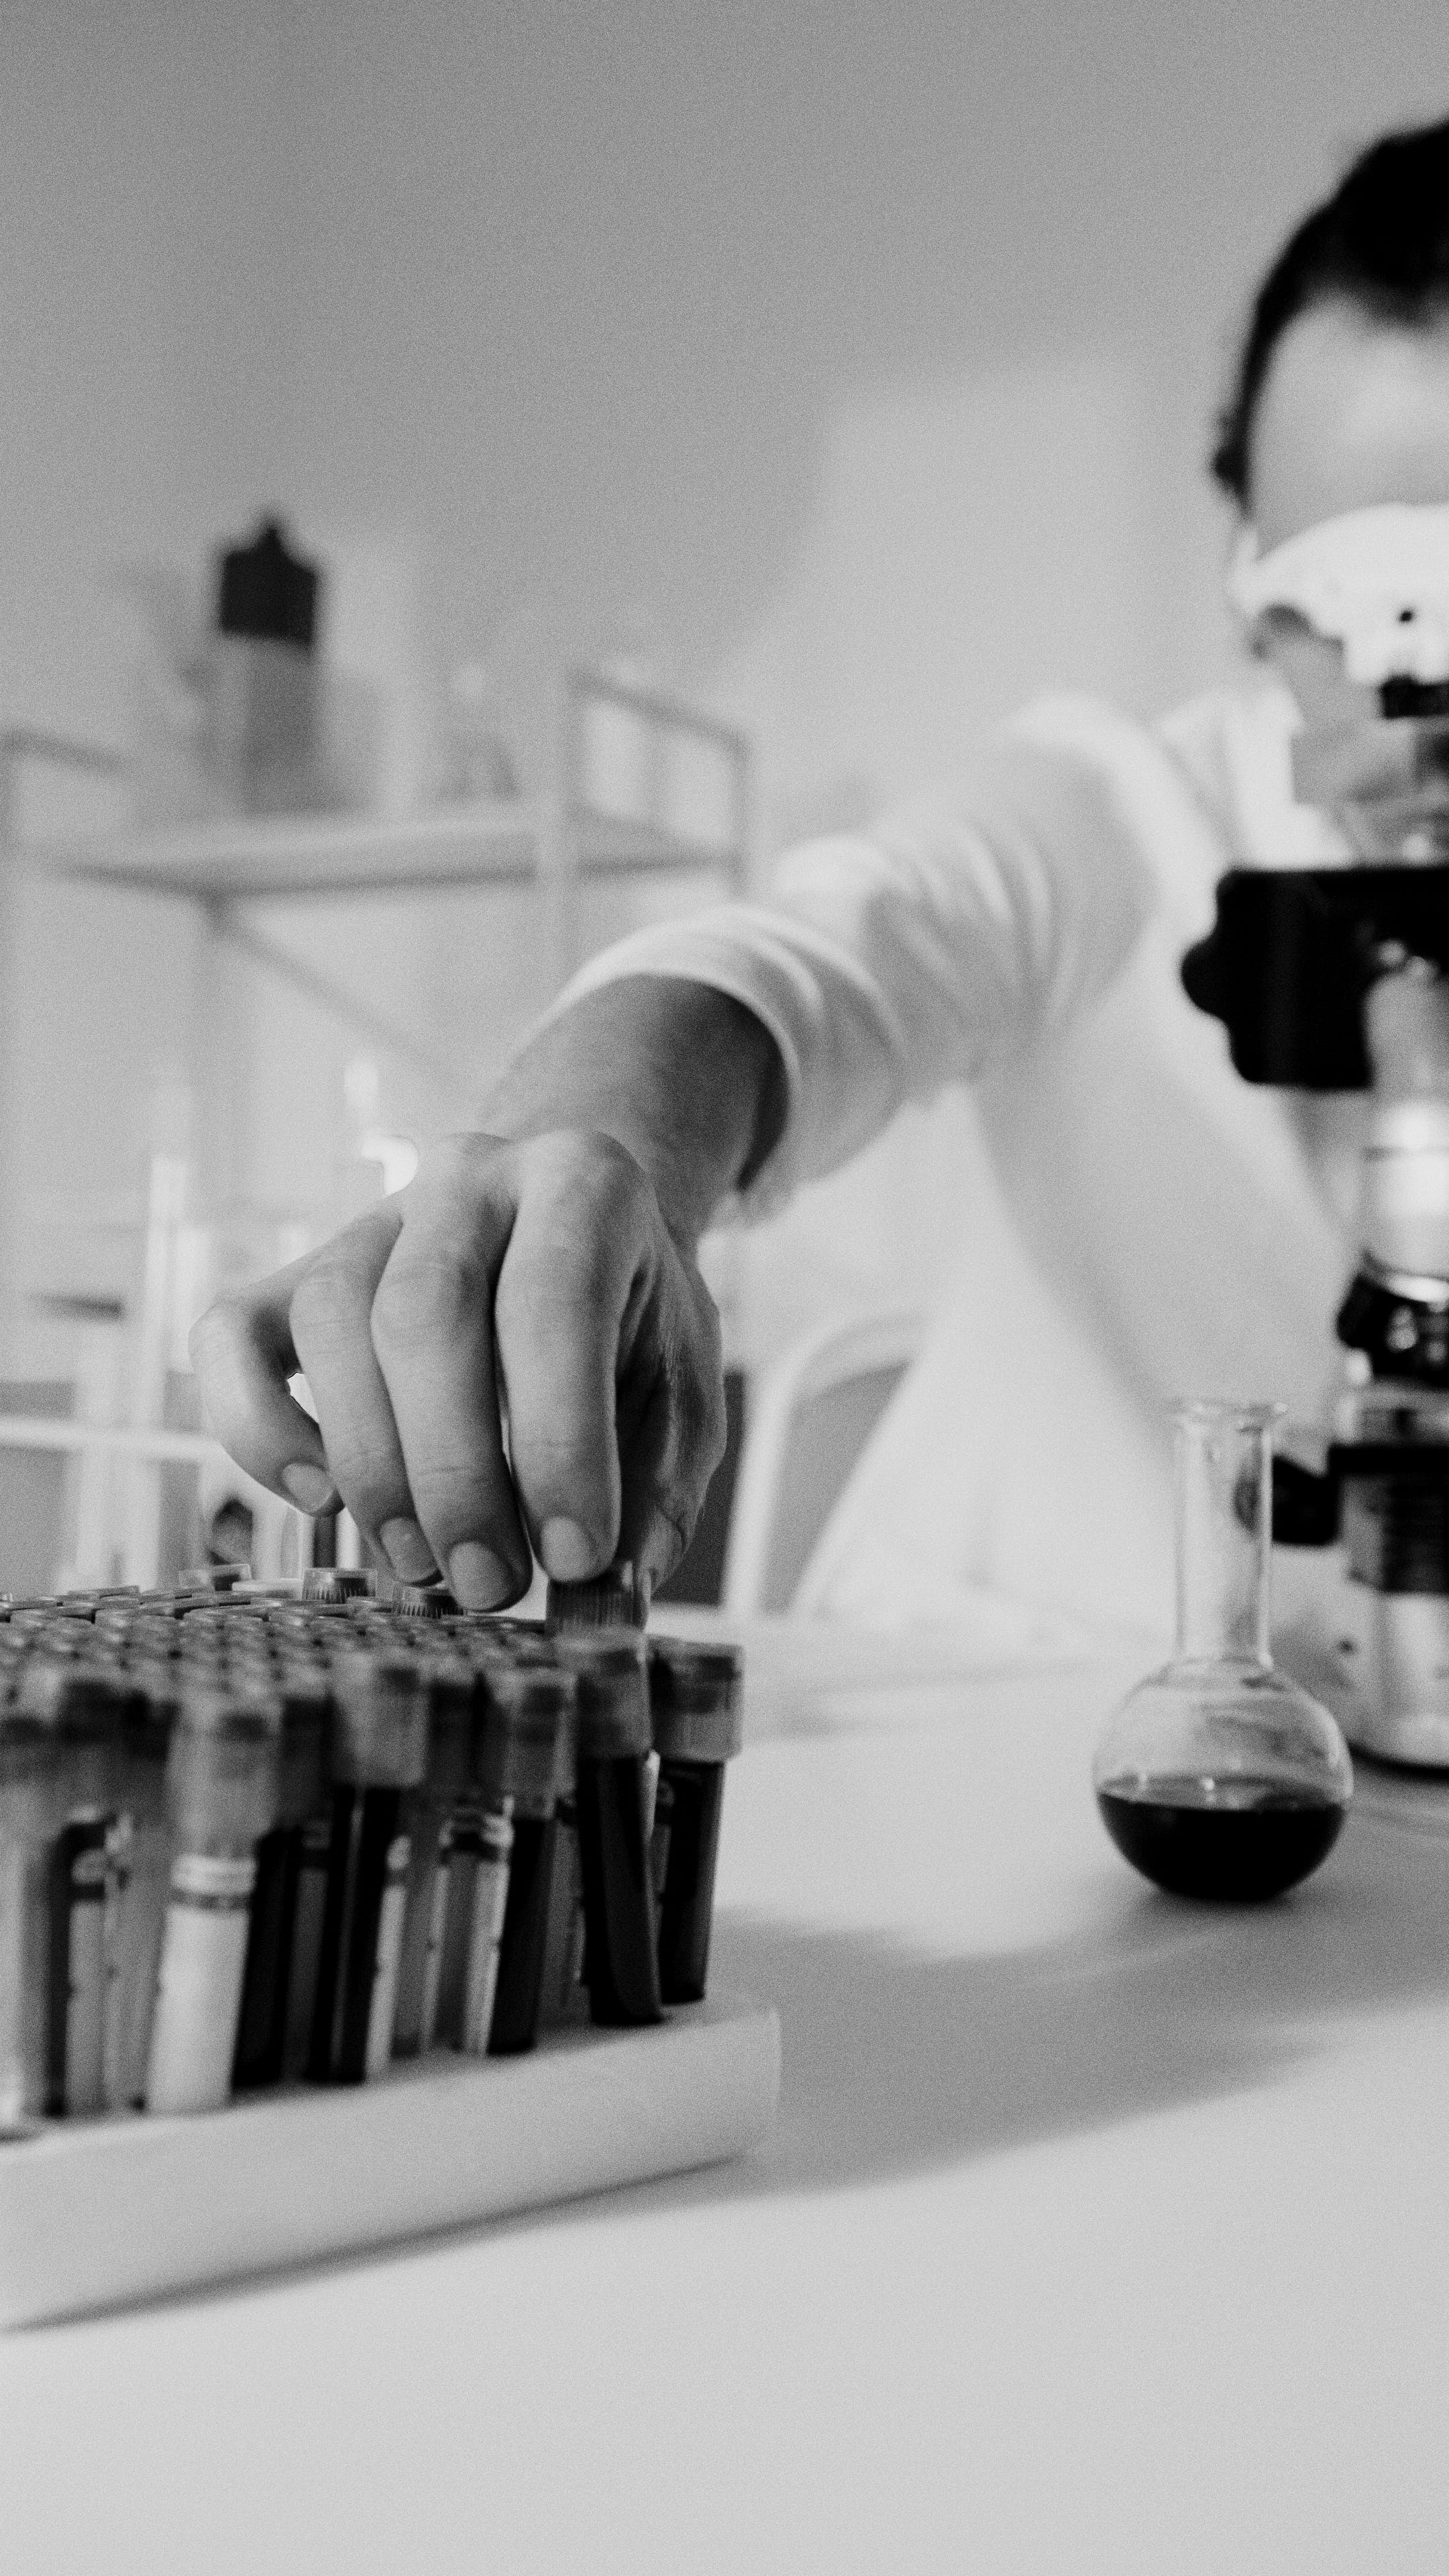 “European Society of Cardiology” anbefaler genotypingstest før behandling.